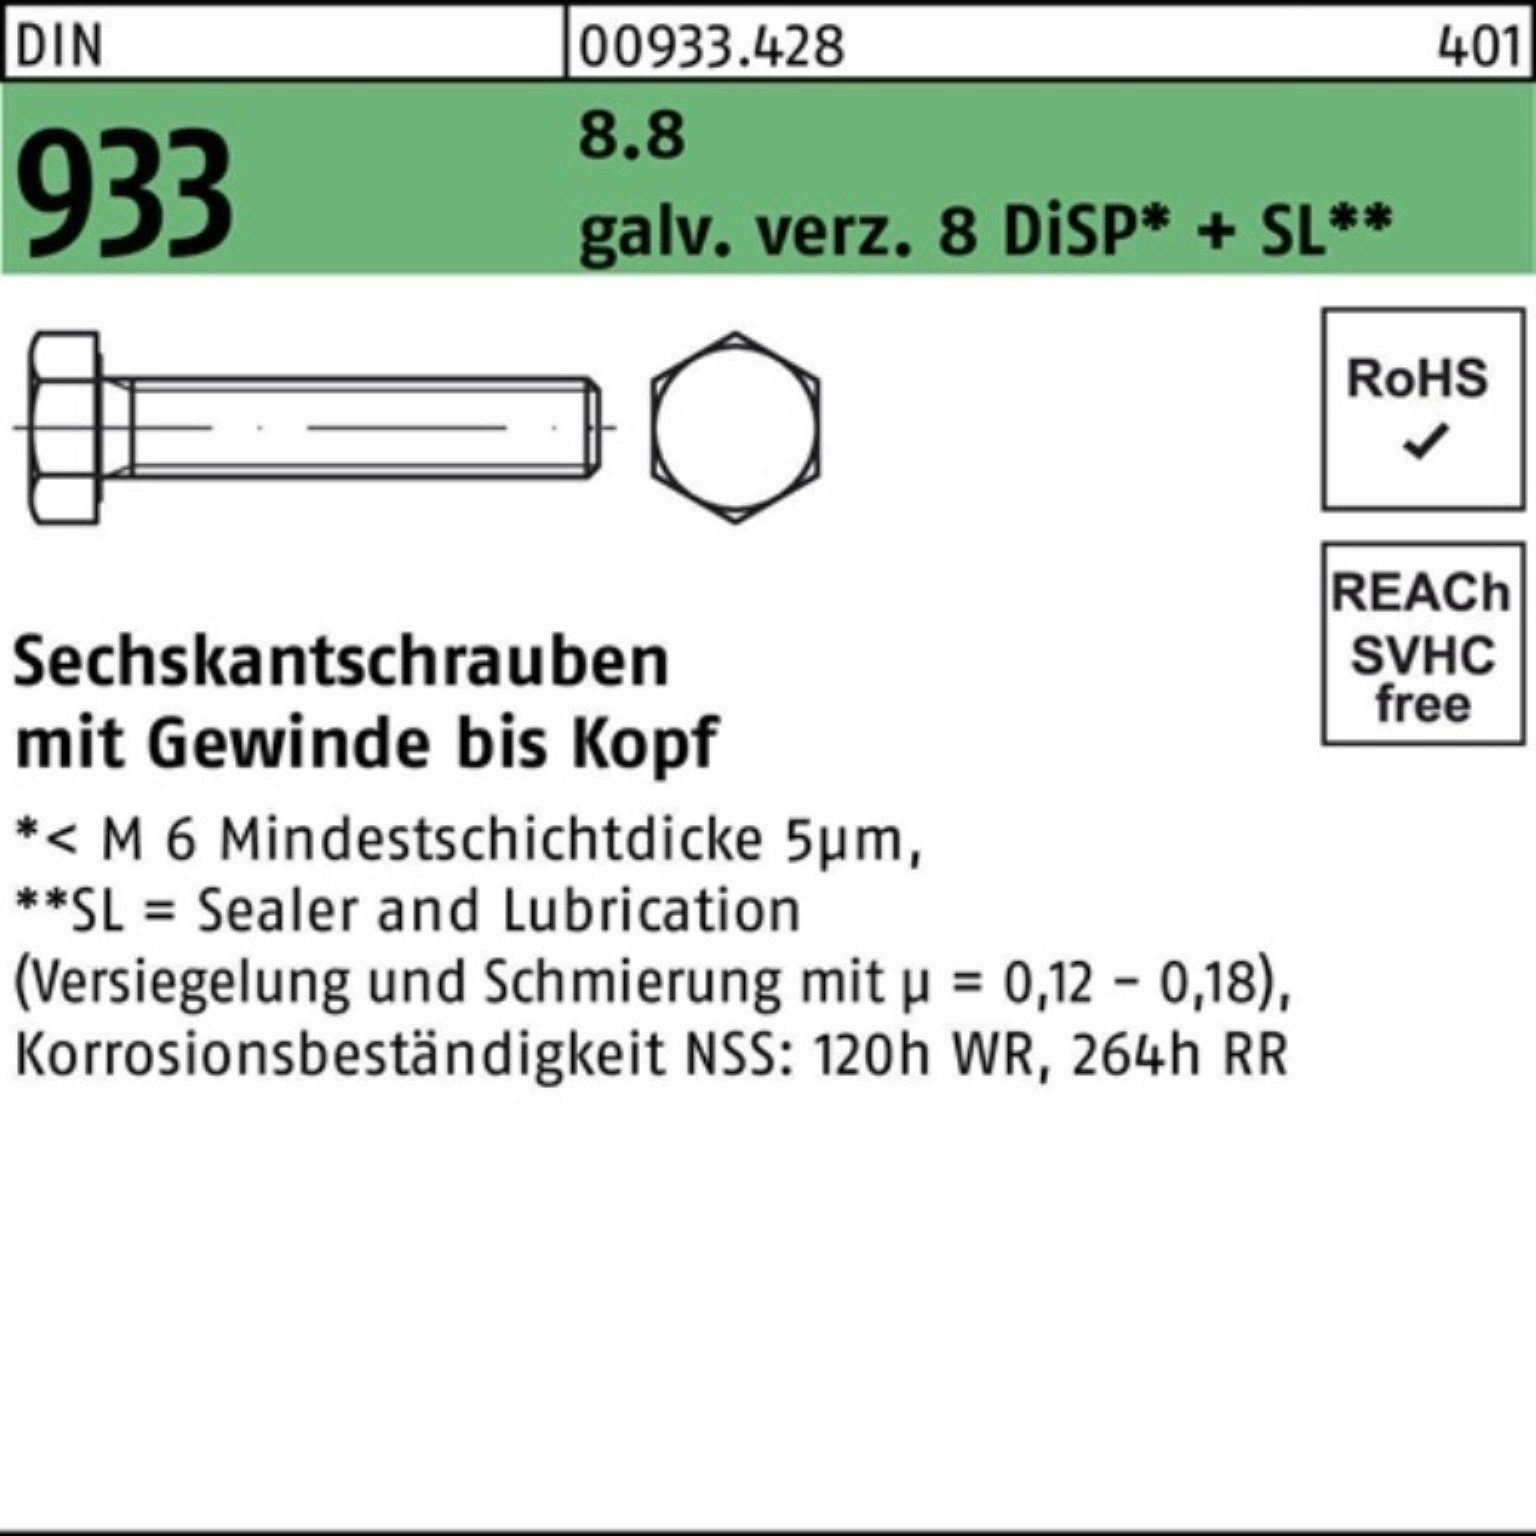 Reyher Sechskantschraube 8.8 gal 8 Sechskantschraube + Pack VG M8x 933 DiSP Zn 50 SL DIN 200er